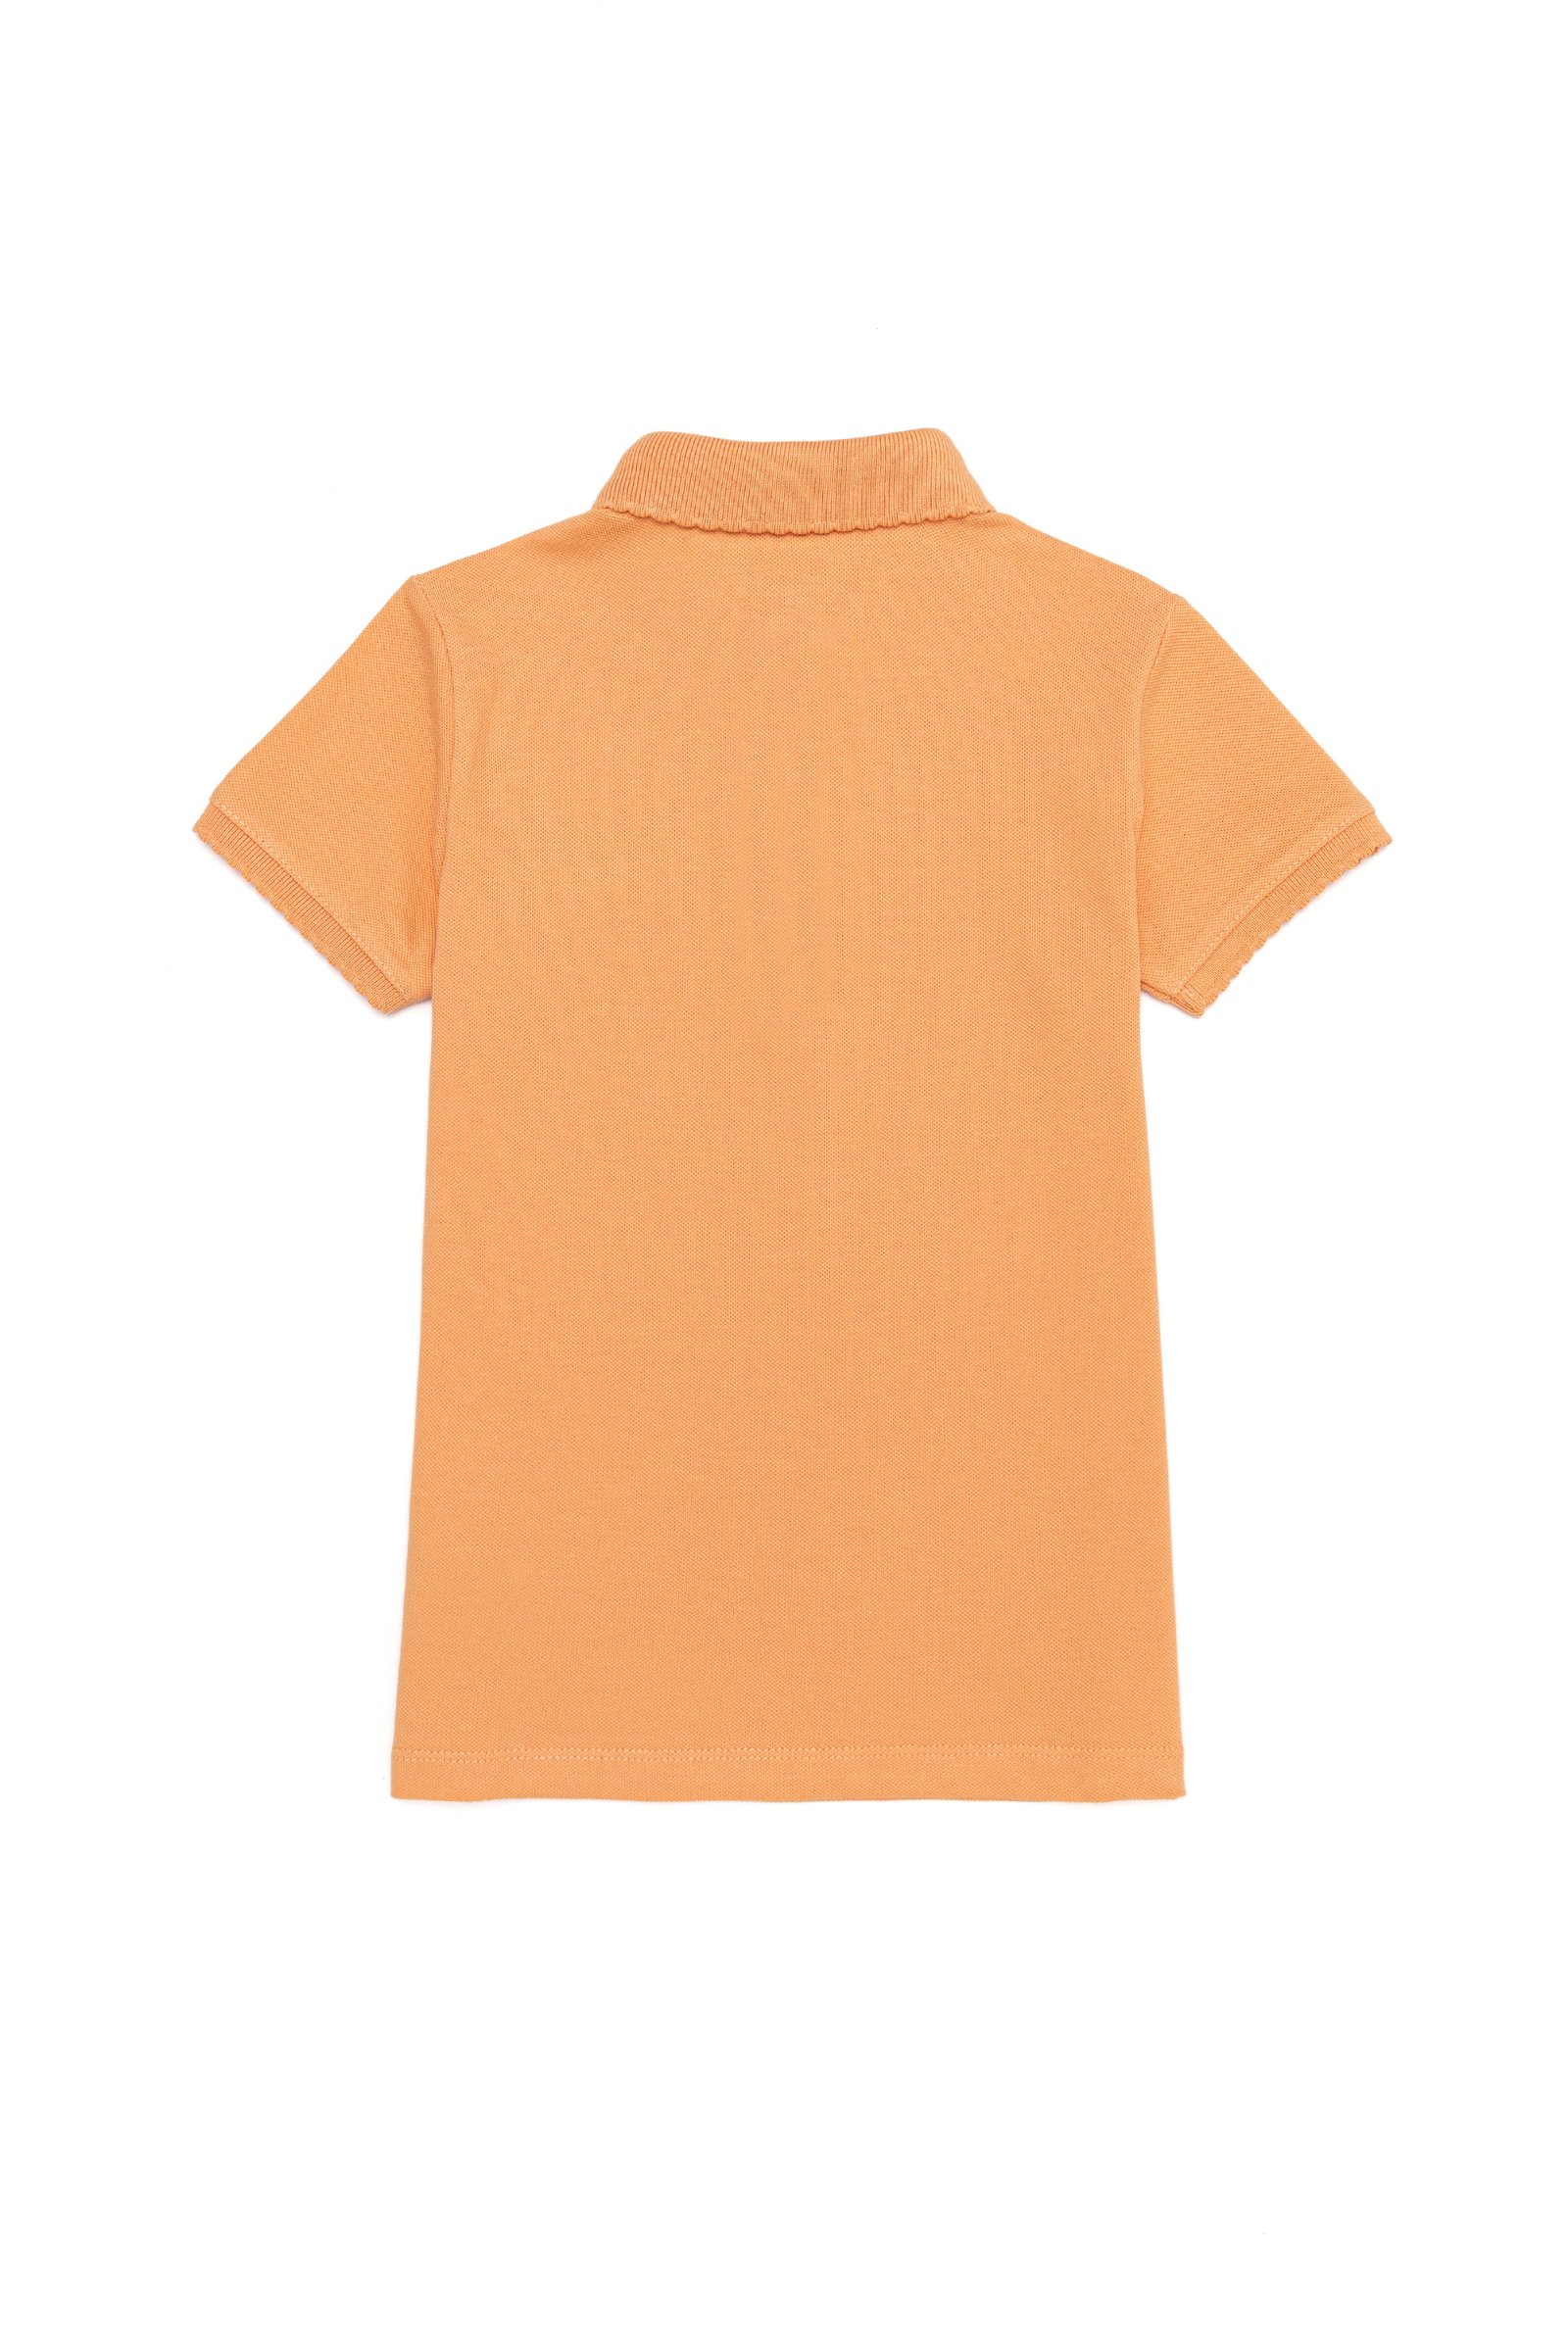 تی شرت یقه پولو زرد  استاندارد فیت  دخترانه یو اس پولو | US POLO ASSN